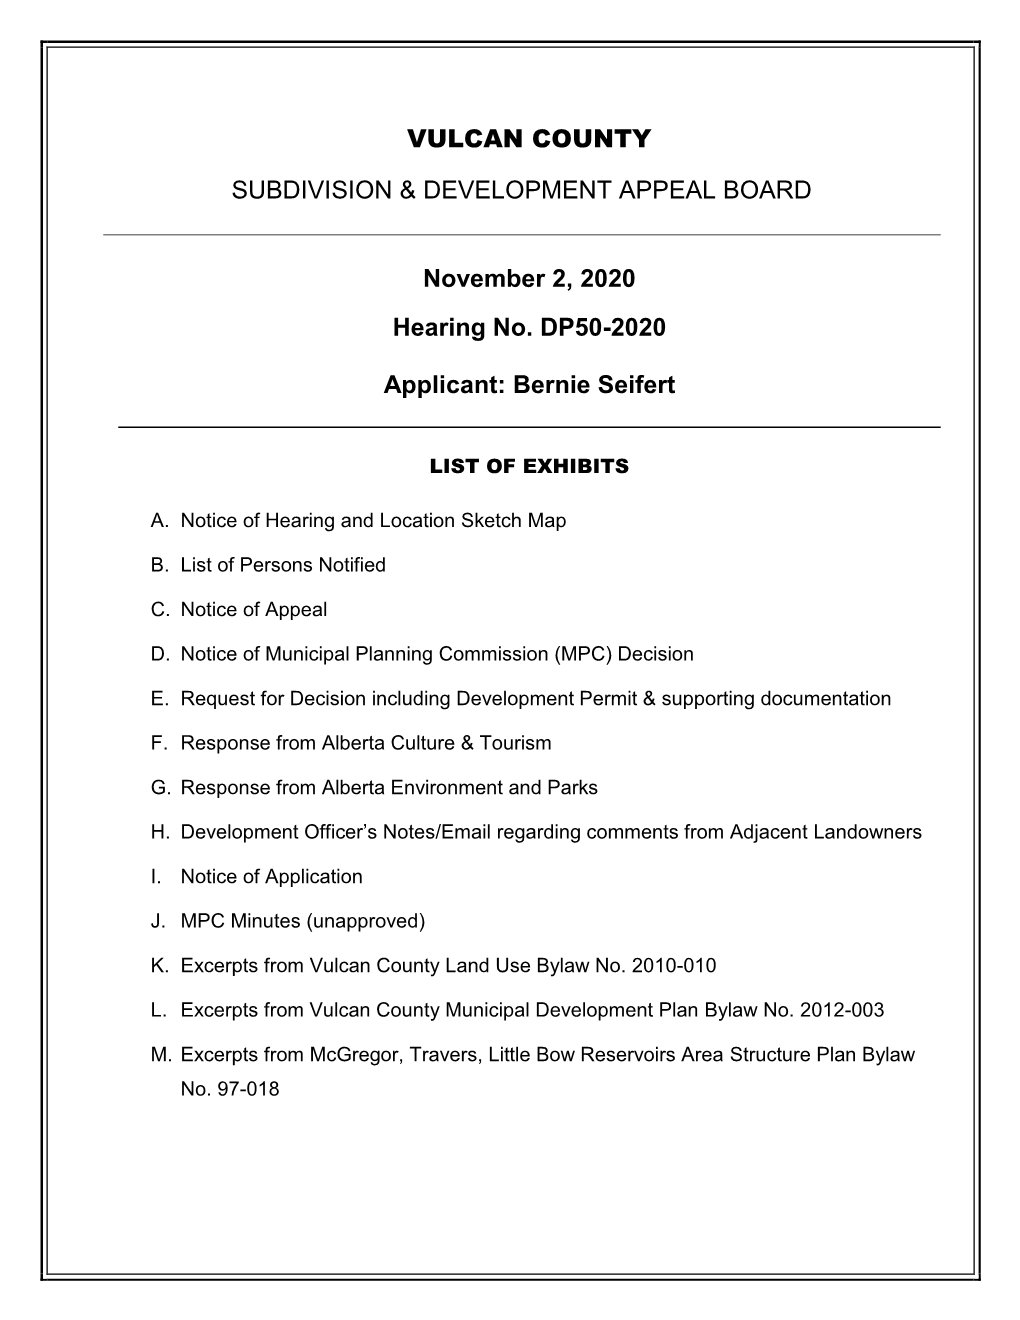 Vulcan County Subdivision & Development Appeal Board